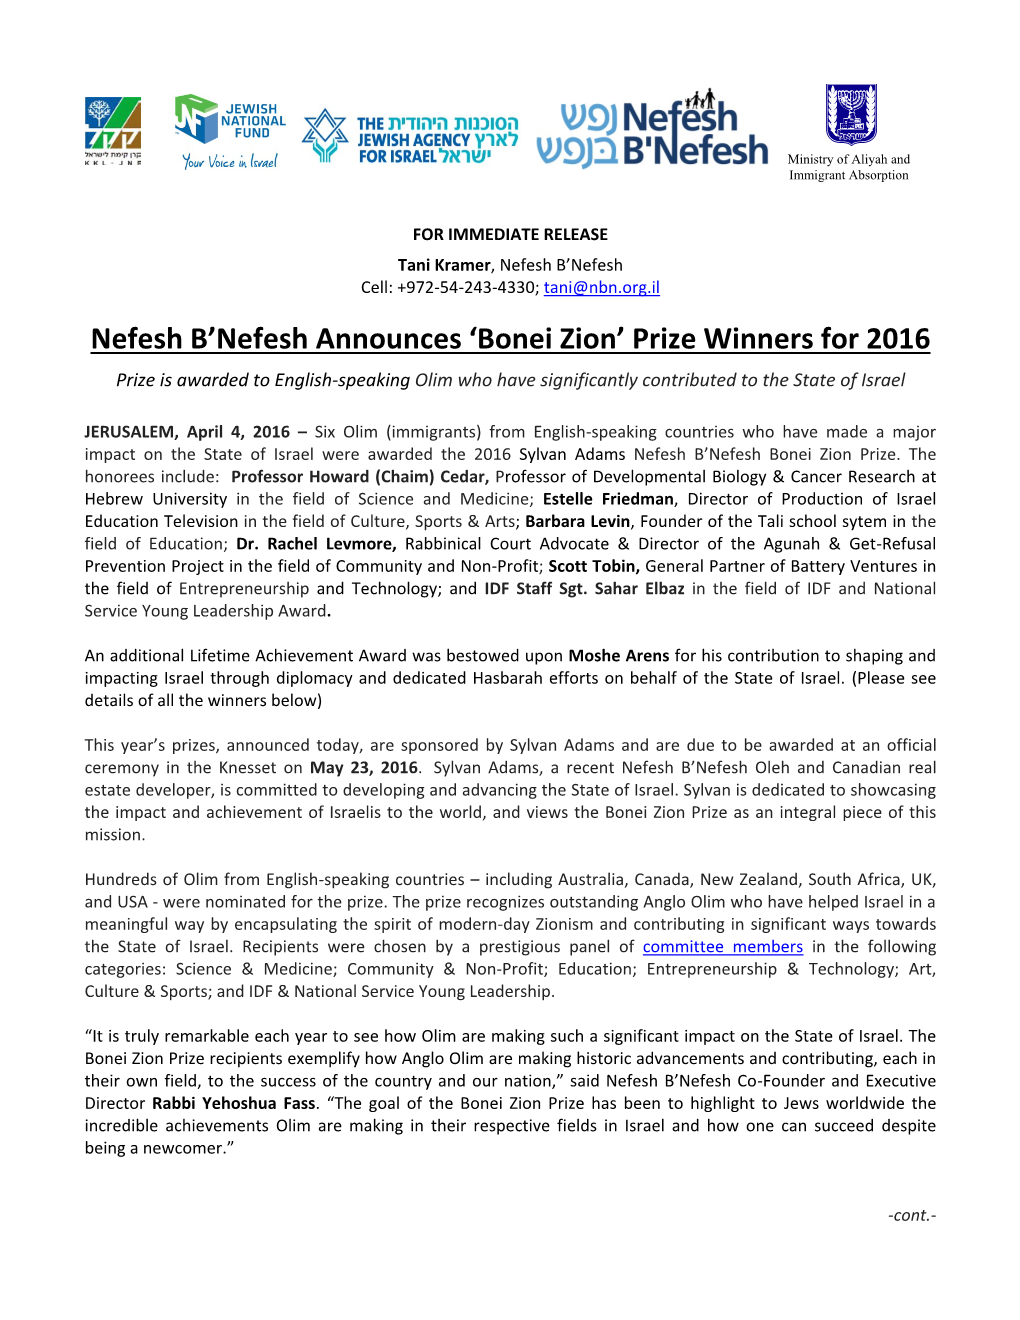 Nefesh B'nefesh Announces 'Bonei Zion' Prize Winners for 2016